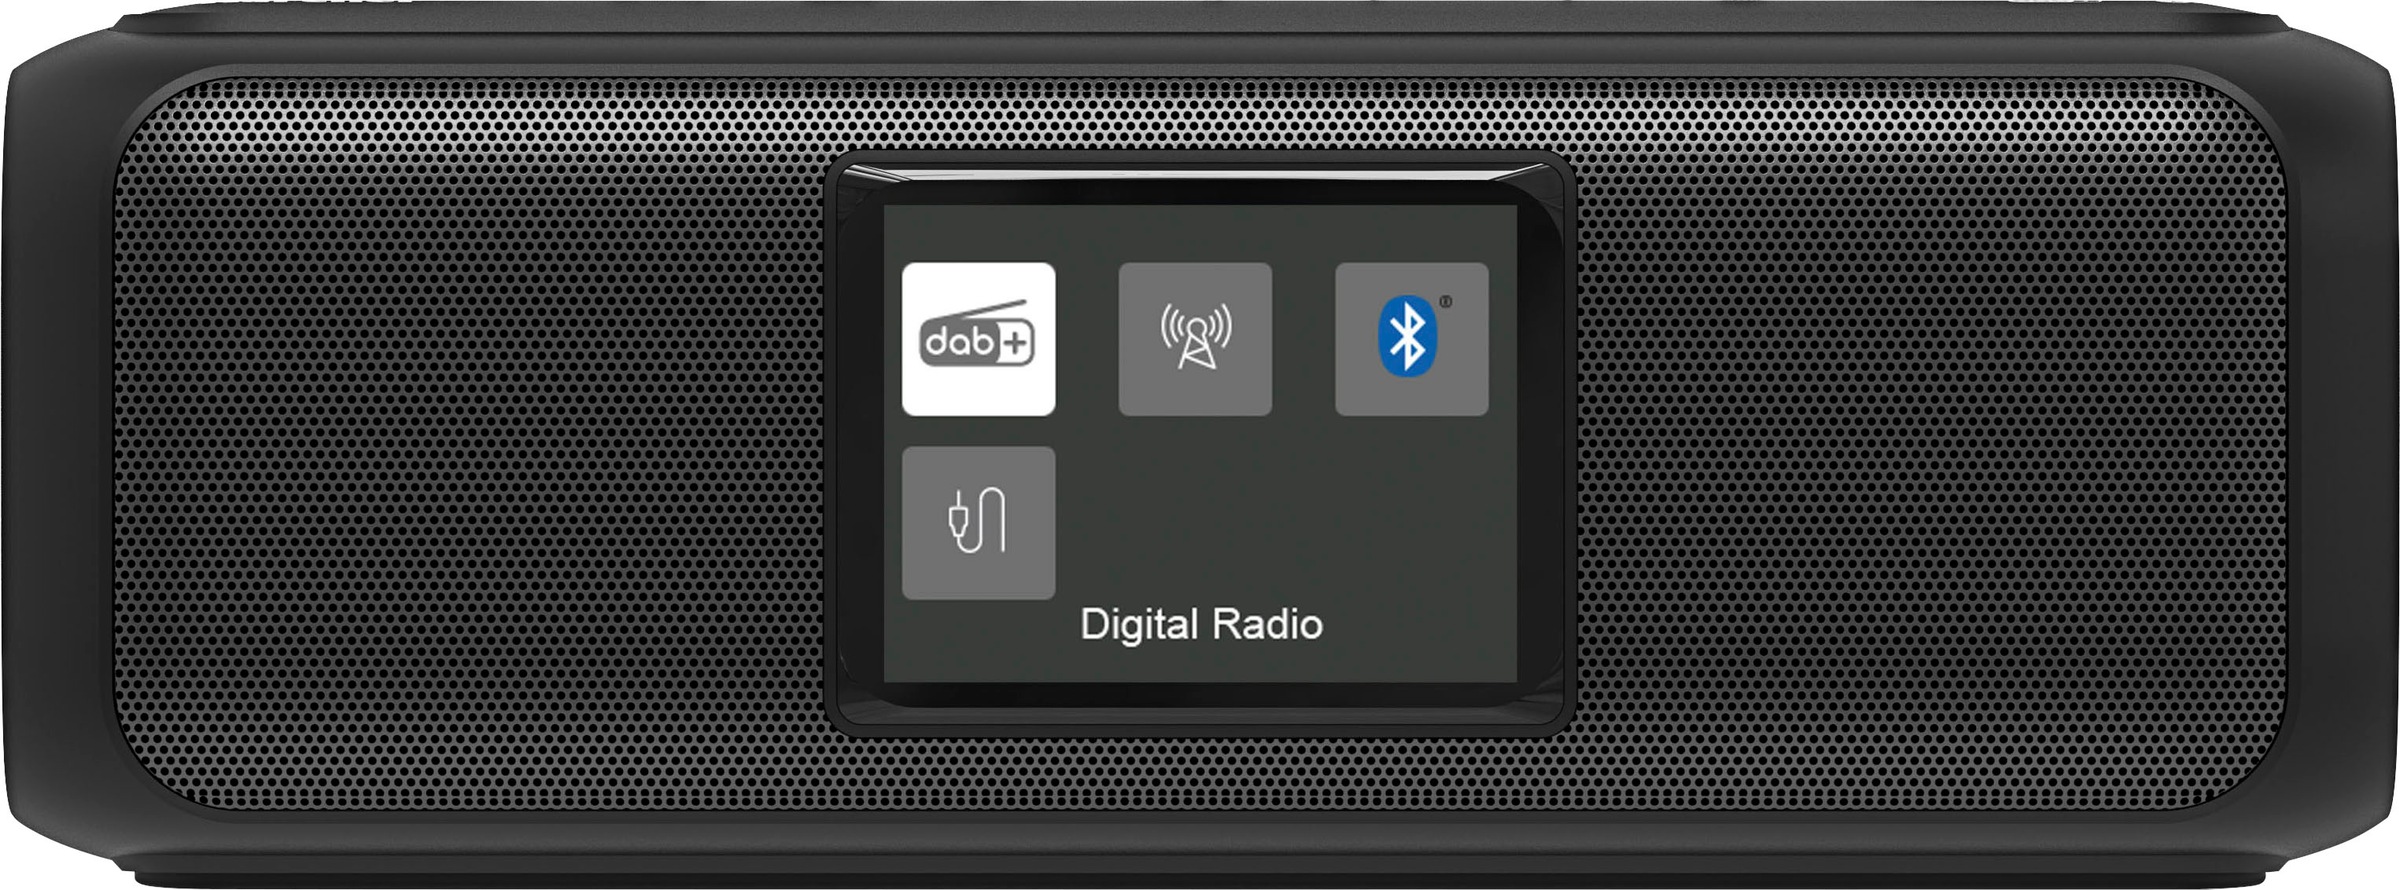 3 RDS UNIVERSAL (DAB+) »DAB | Garantie Digitalradio Digitalradio Lautsprecher«, XXL Karcher Bluetooth 5 ➥ Go (Bluetooth Jahre W) (DAB+)-UKW mit